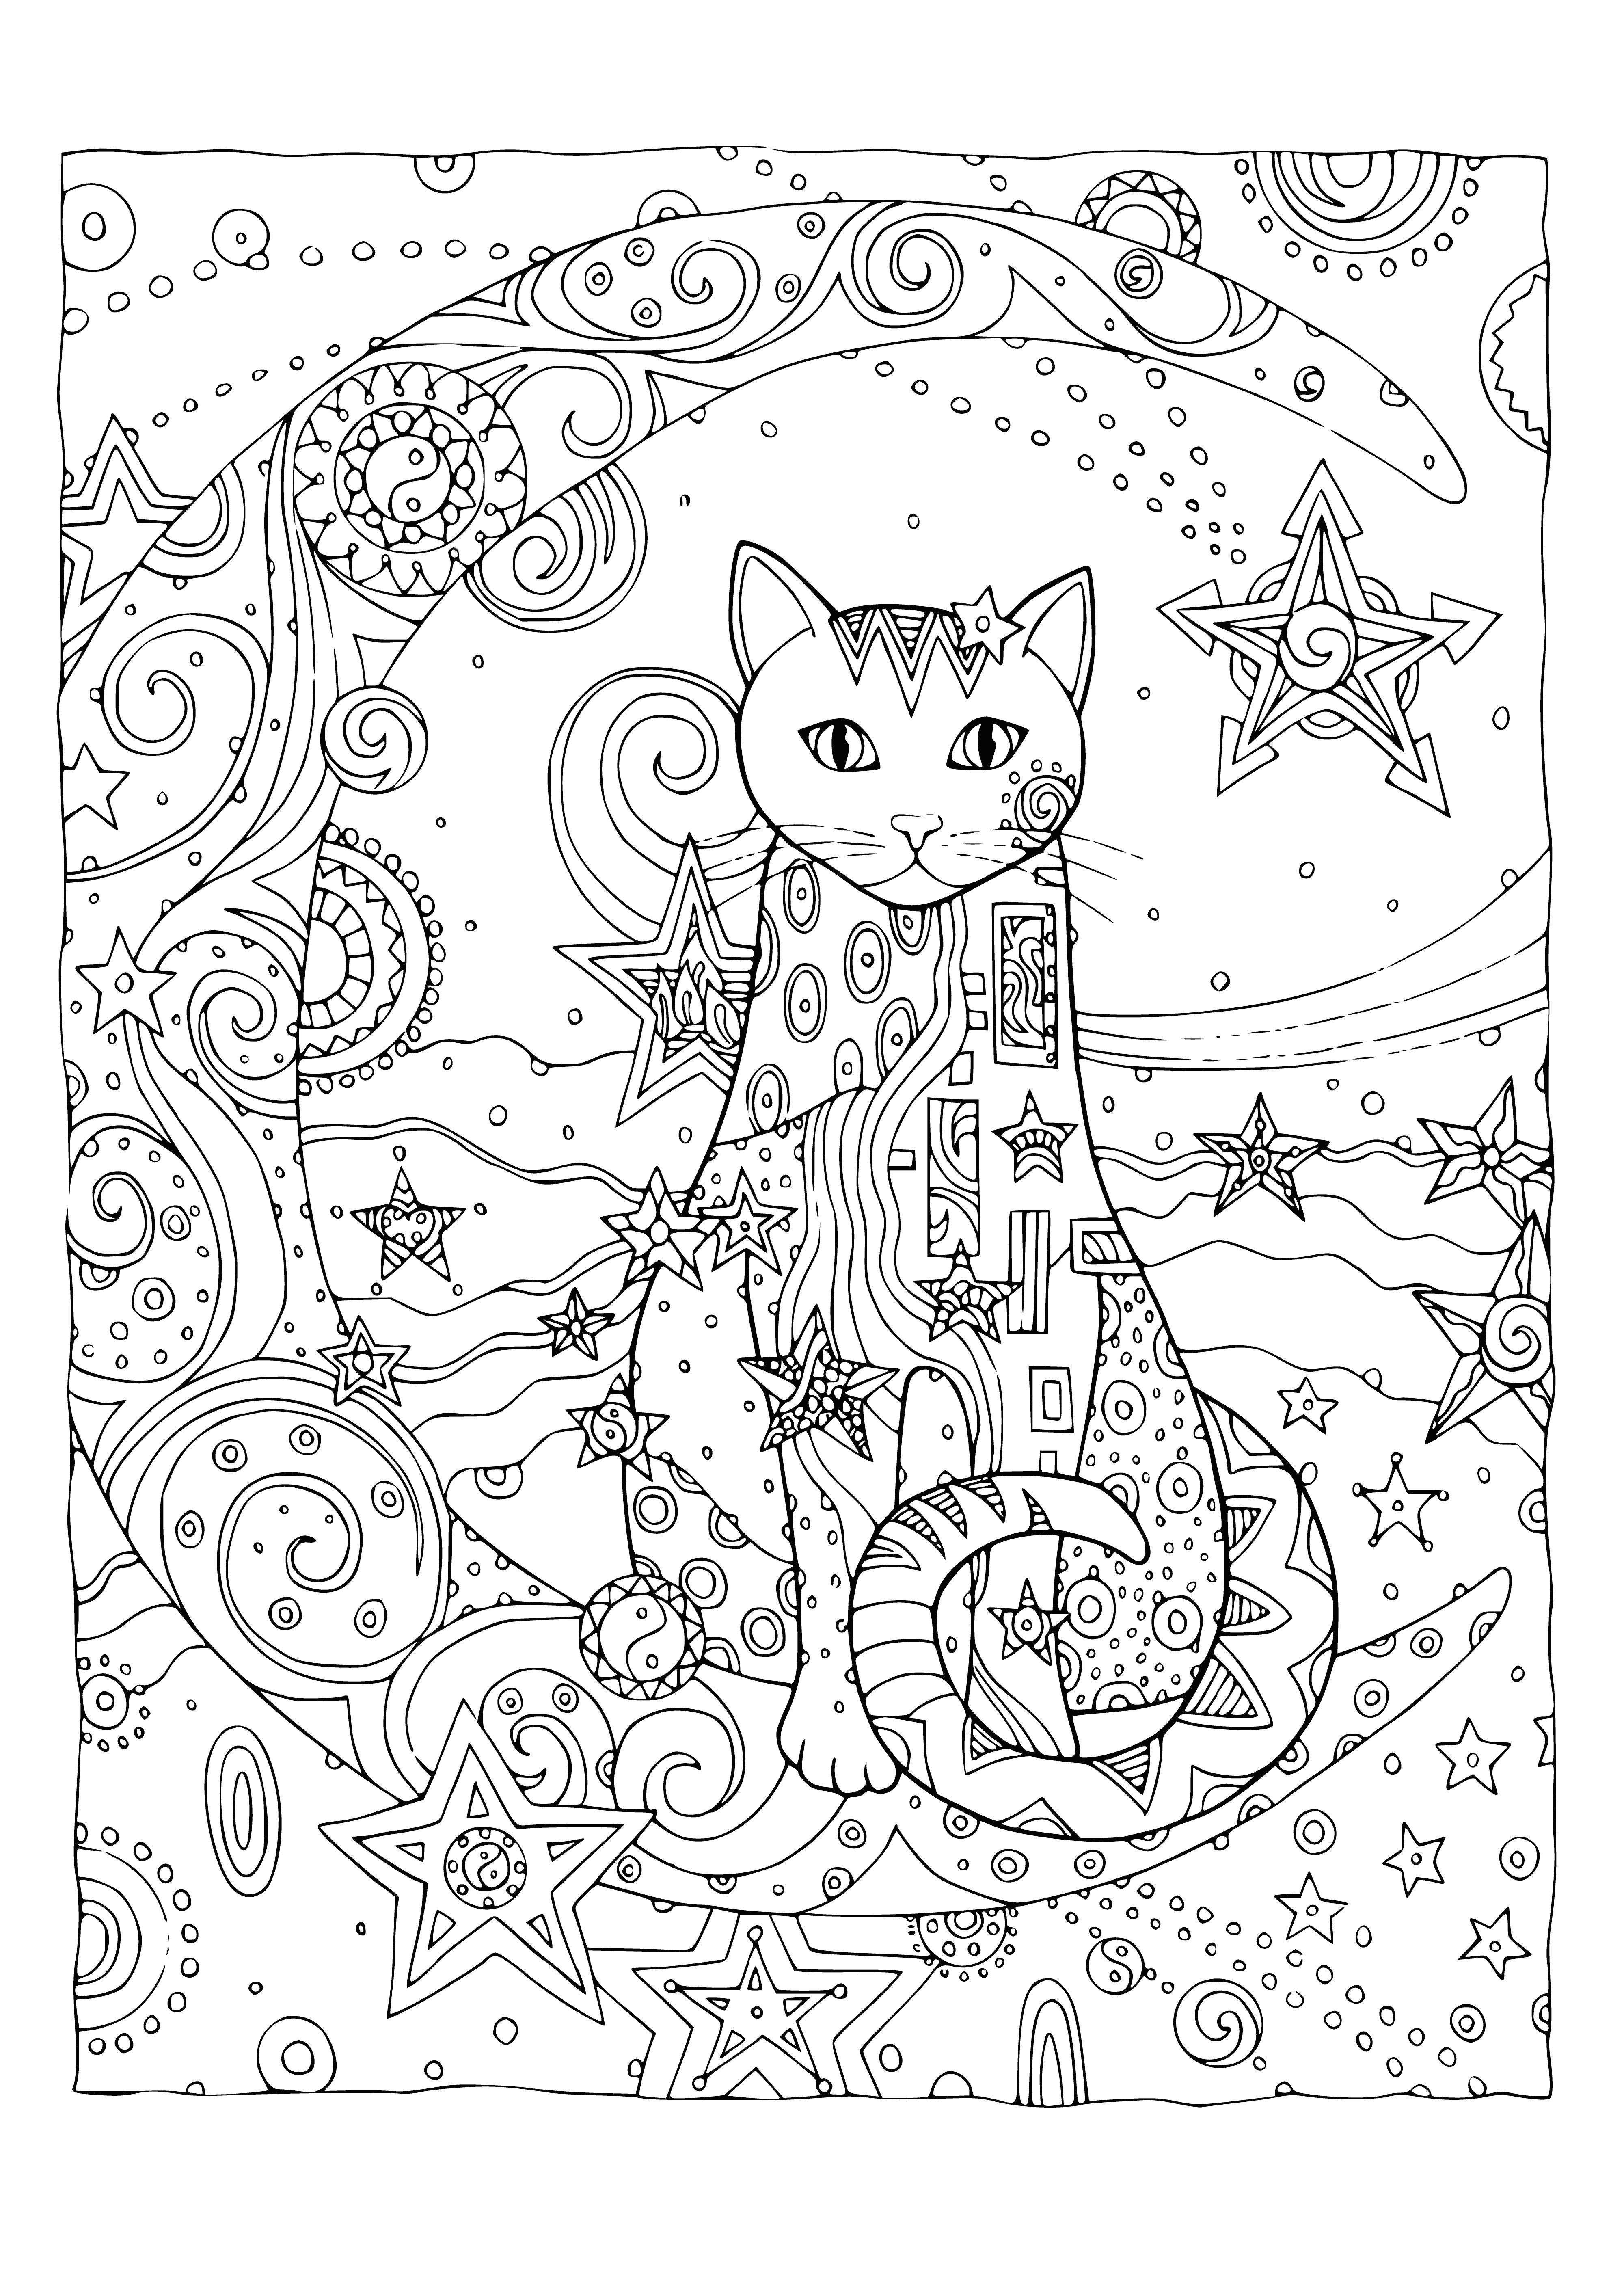 Serene coloring page антистрессовый котенок